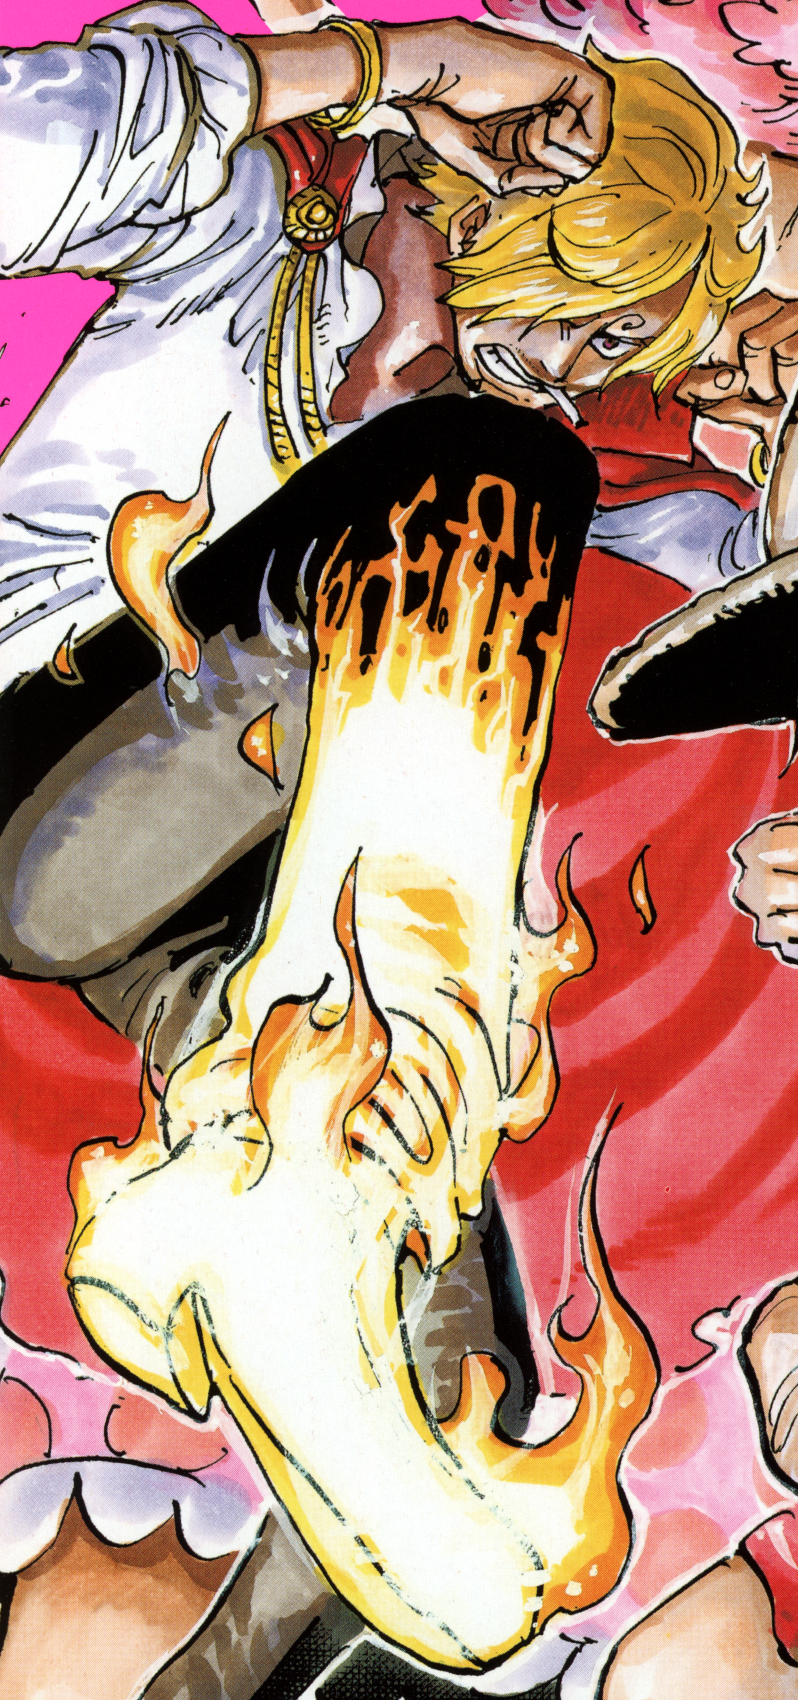 Sanji (Vinsmoke Sanji) - One Piece Verse - Superhero Database